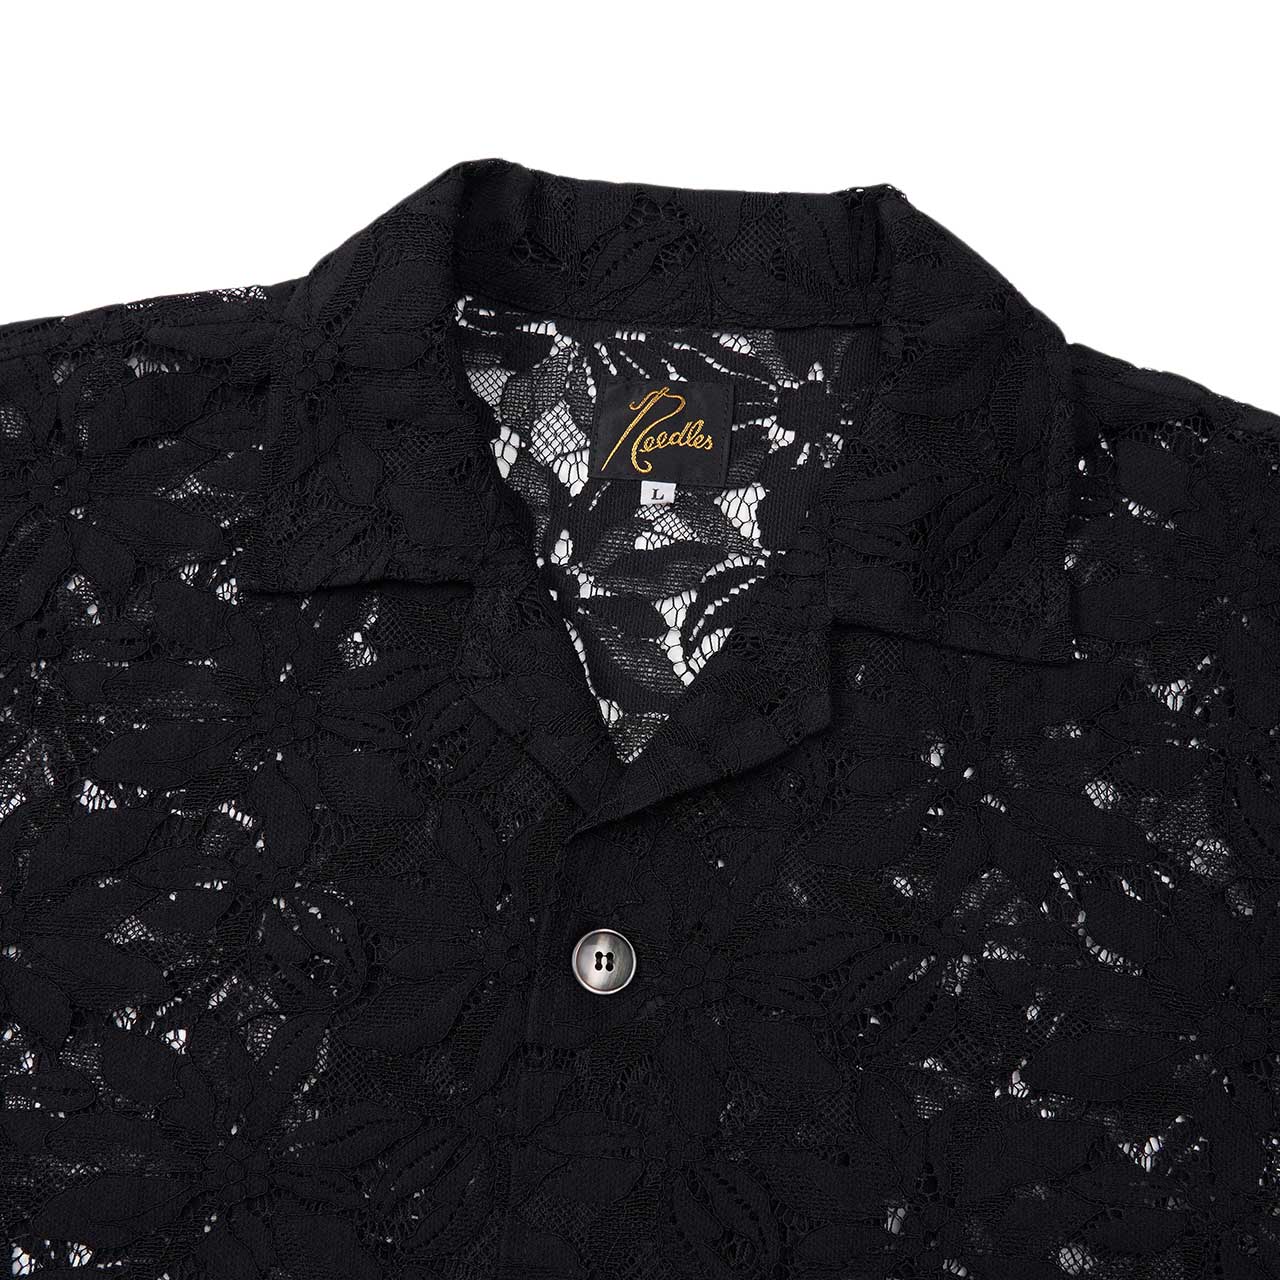 needles cabana lace shirt (black) - a.plus store